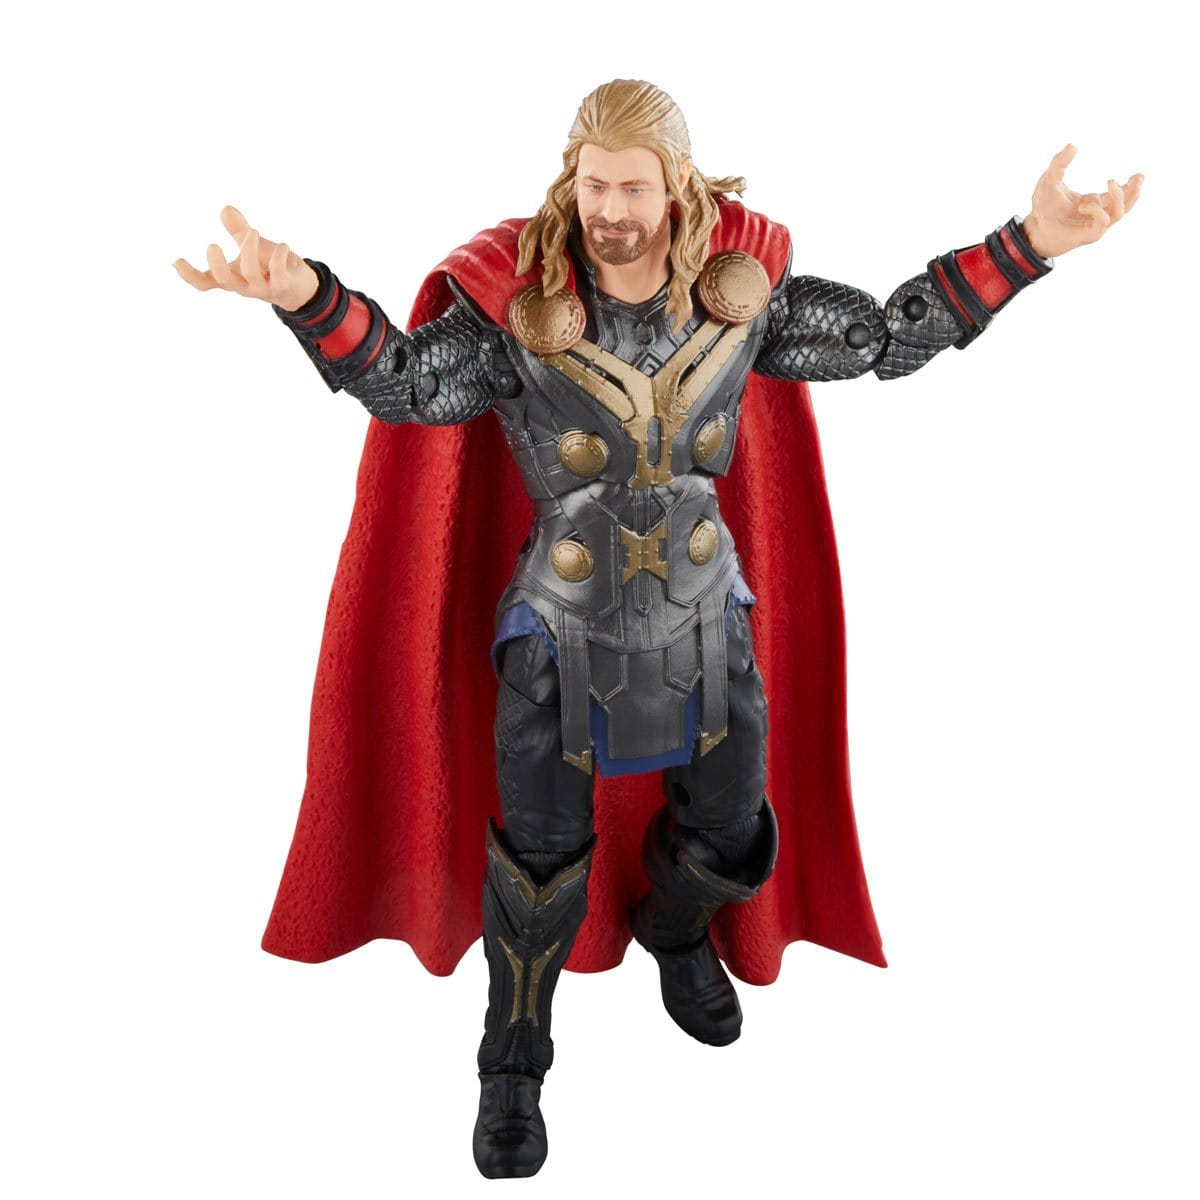 Thor: The Dark World Marvel Legends Thor 6-Inch Action Figure